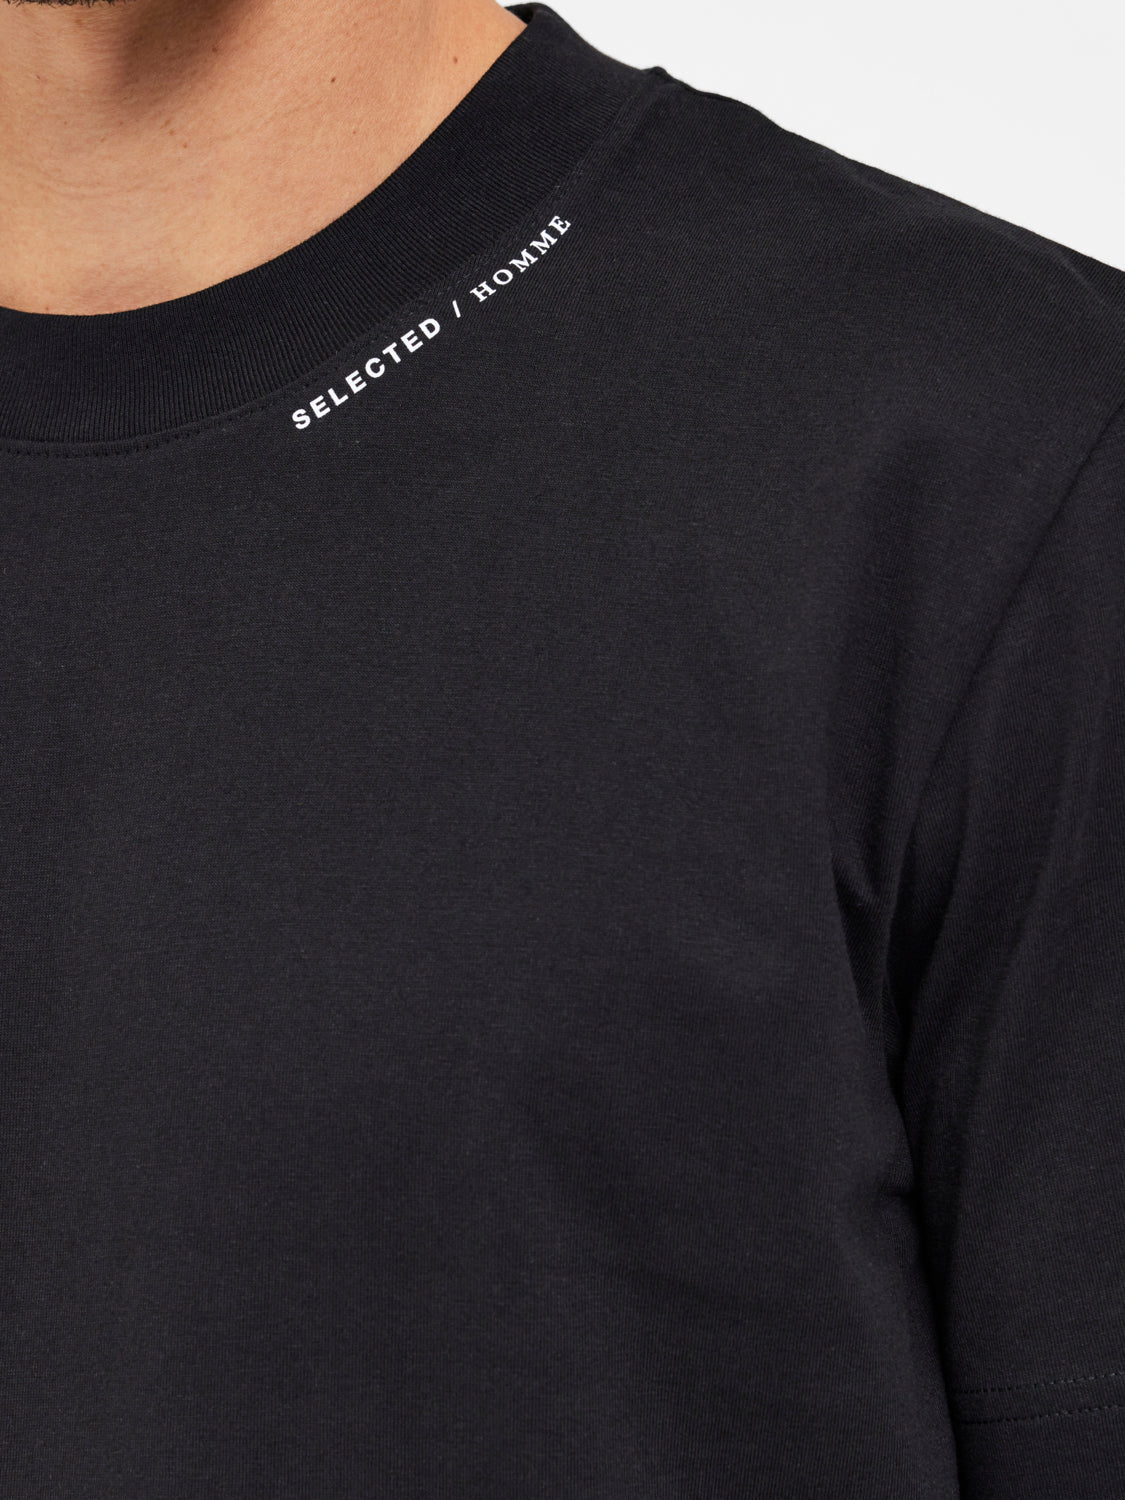 SELECTED HOMME - LEX T-Shirt - Black